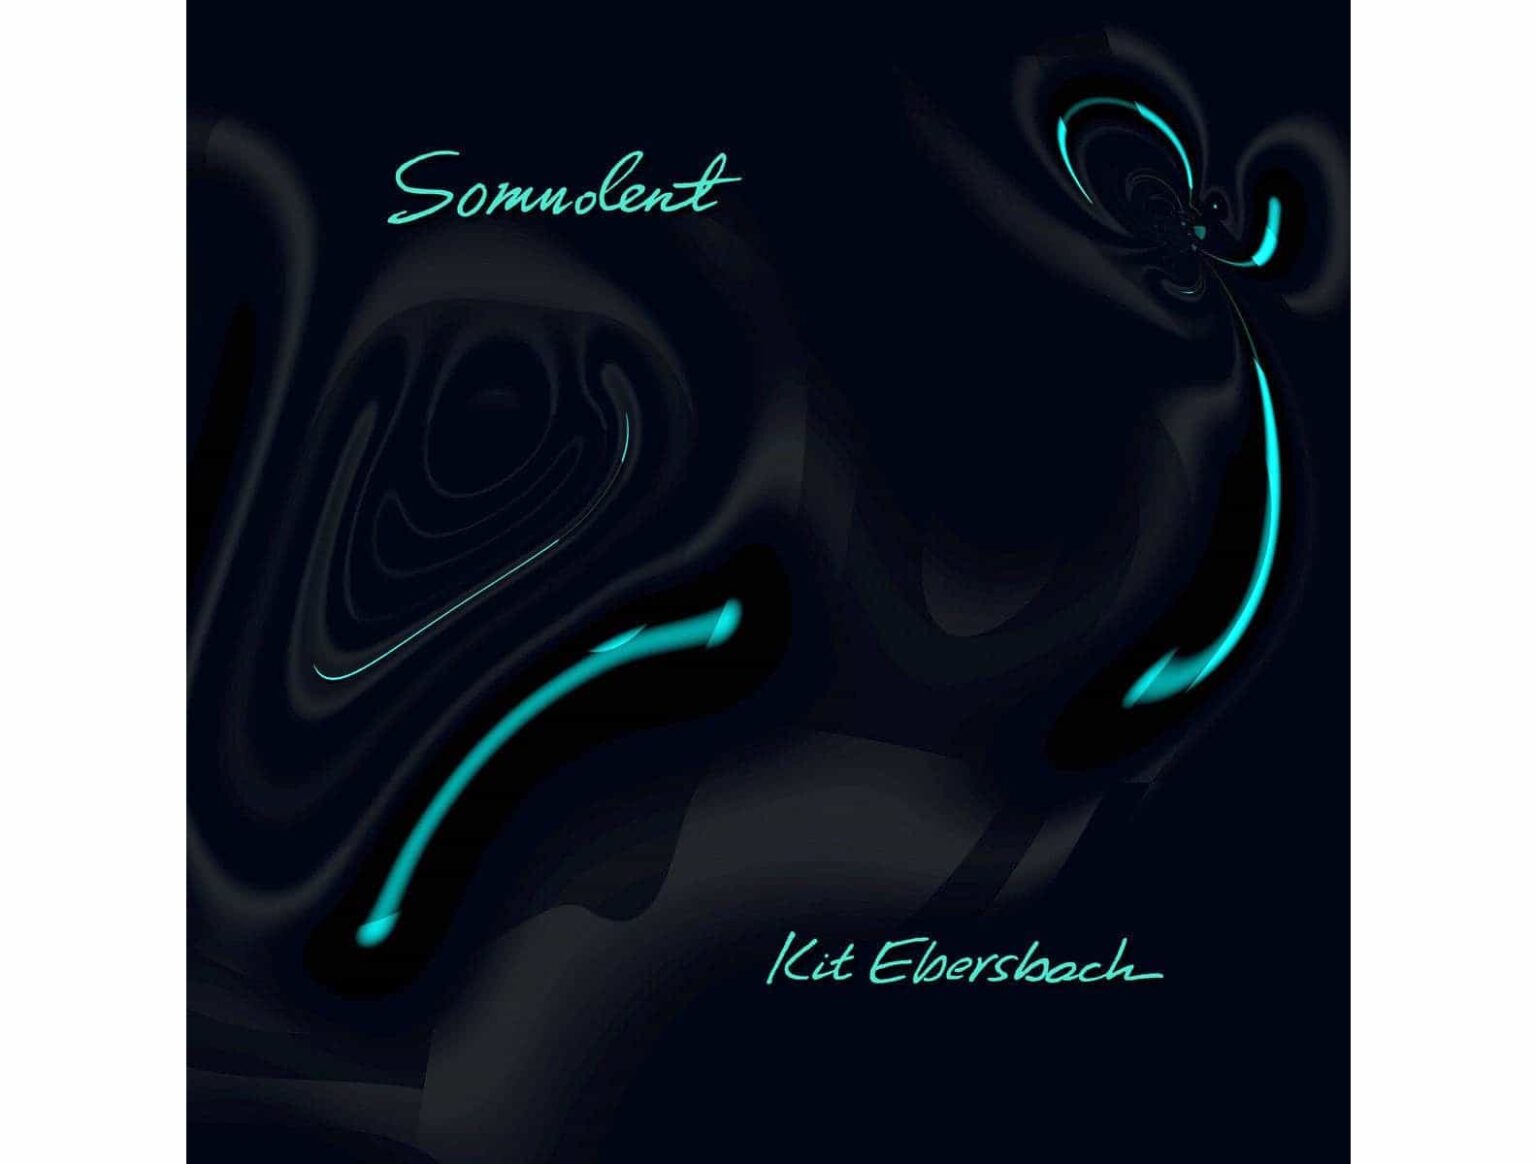 Kit Ebersbach: Somnolent